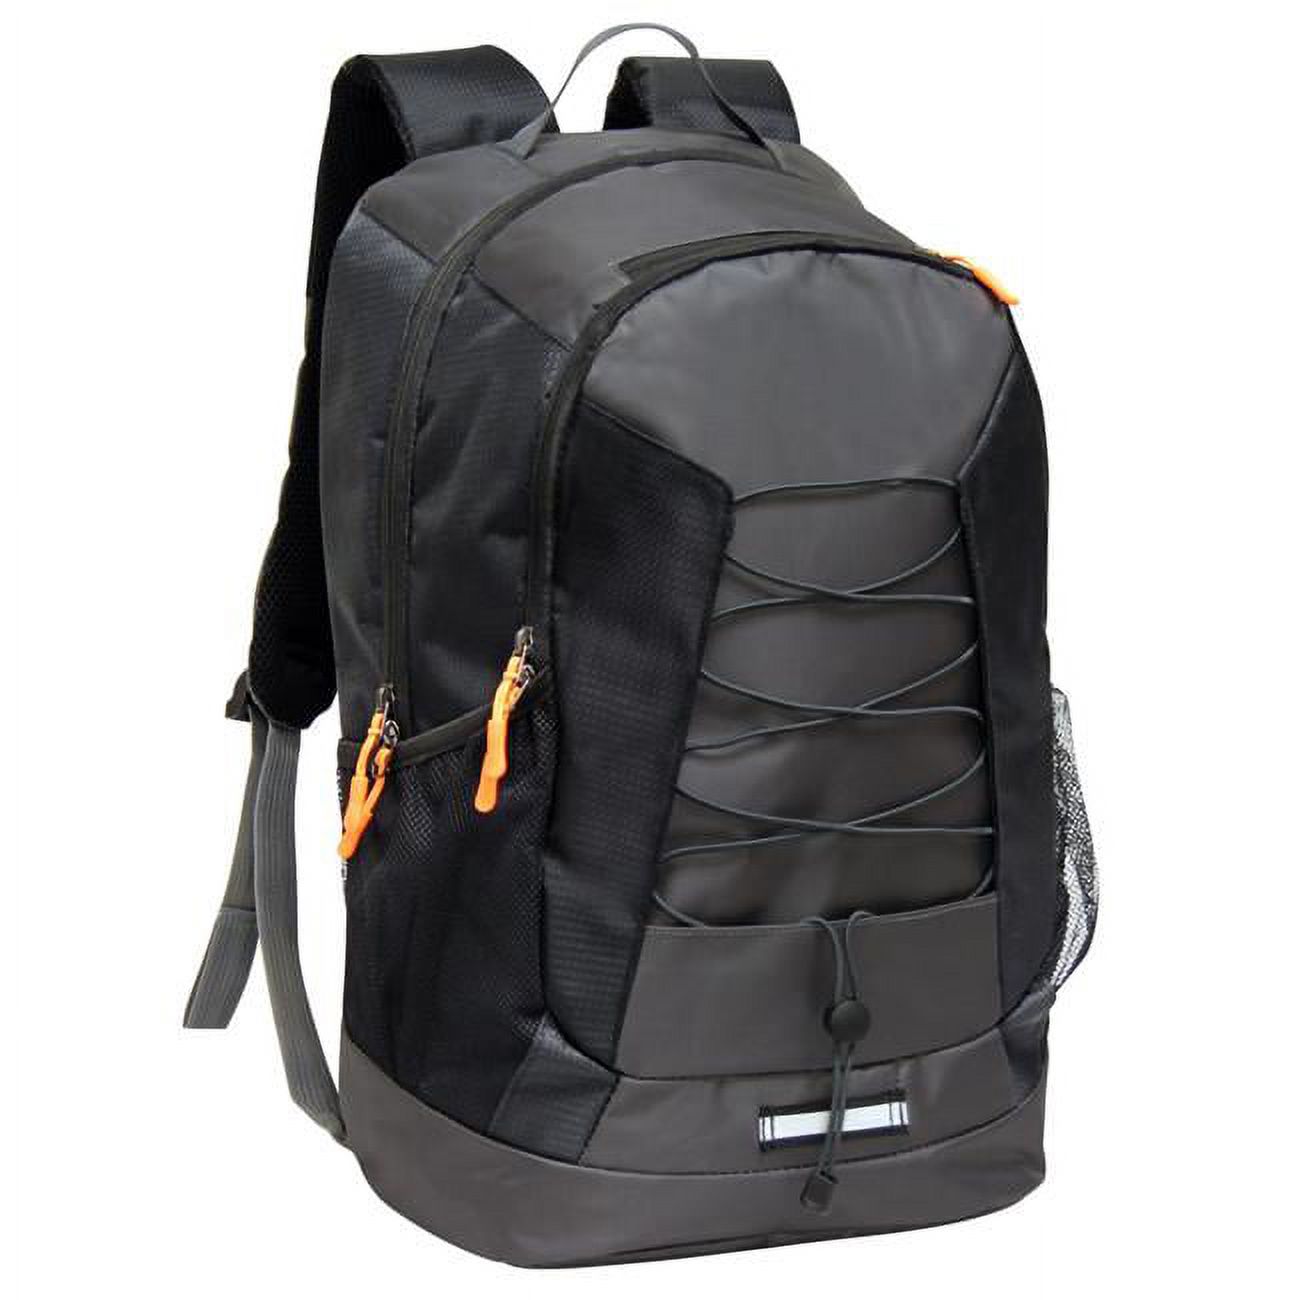 Preferred Nation Helix Backpack - image 1 of 2